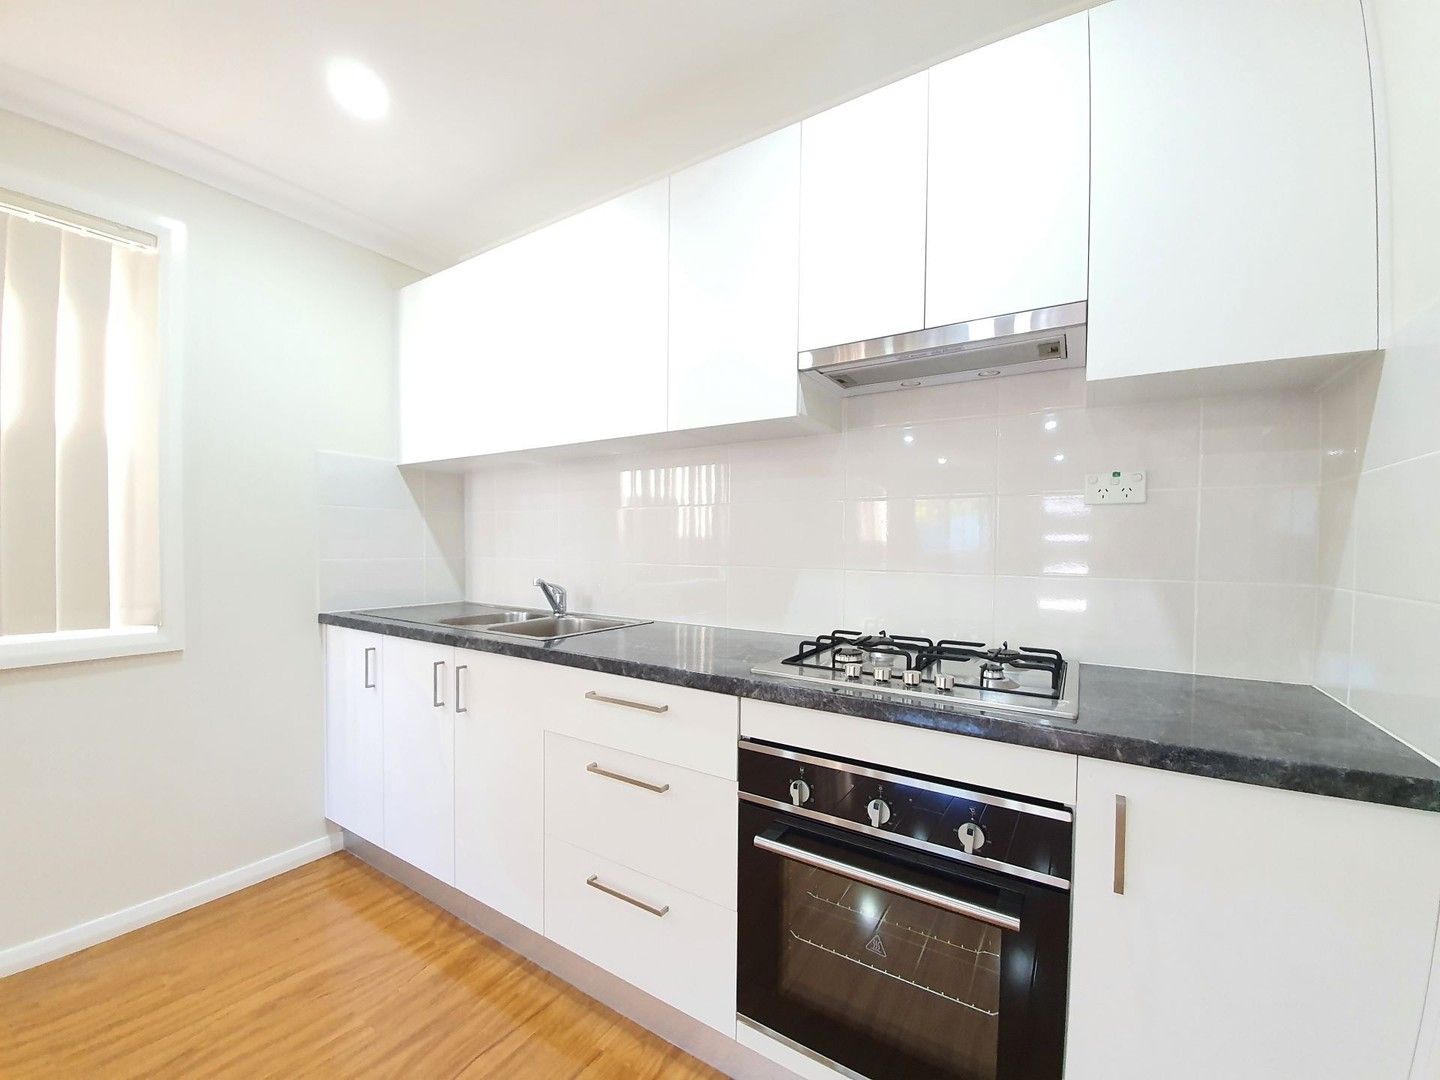 2 bedrooms Apartment / Unit / Flat in 125a Mount Druitt Road MOUNT DRUITT NSW, 2770